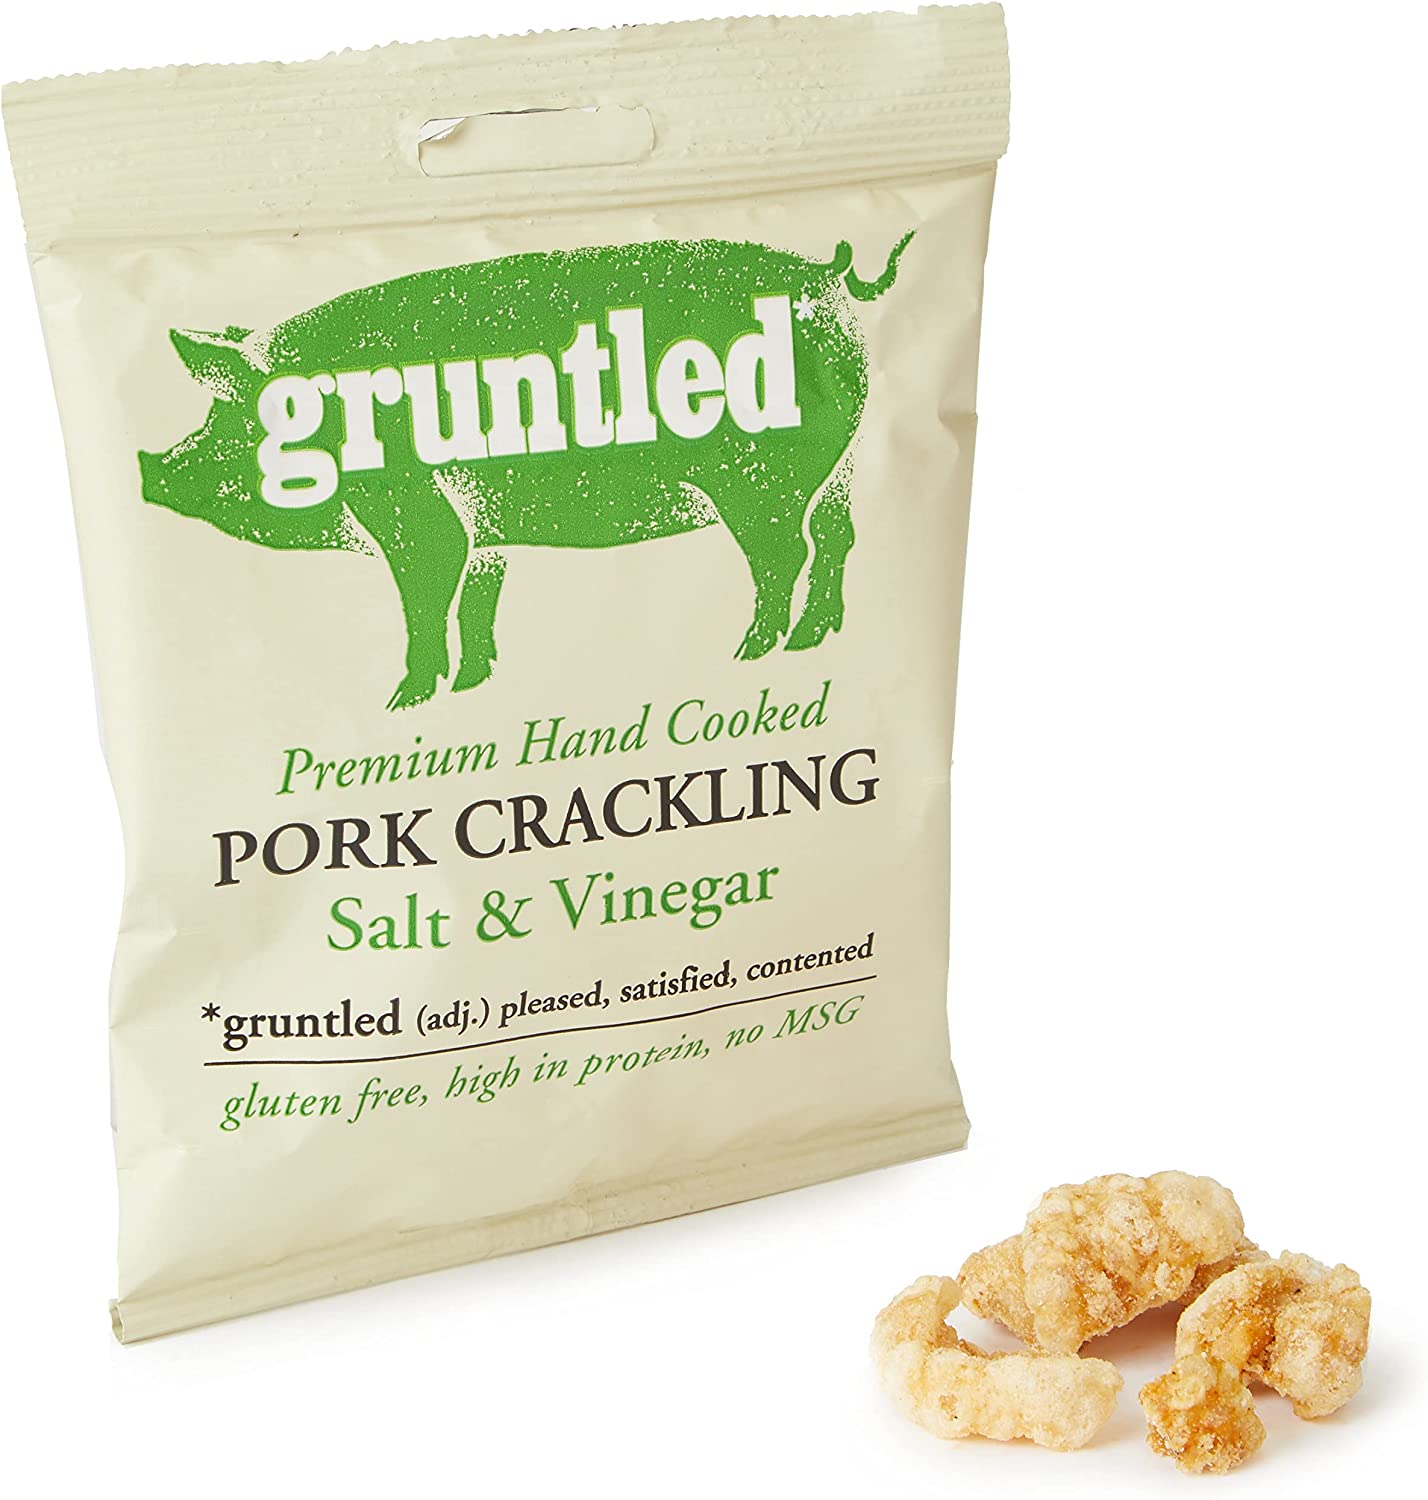 Gruntled Premium Pork Crackling Salt and Vinegar 35g RRP £1.25 CLEARANCE XL 59p or 2 for £1